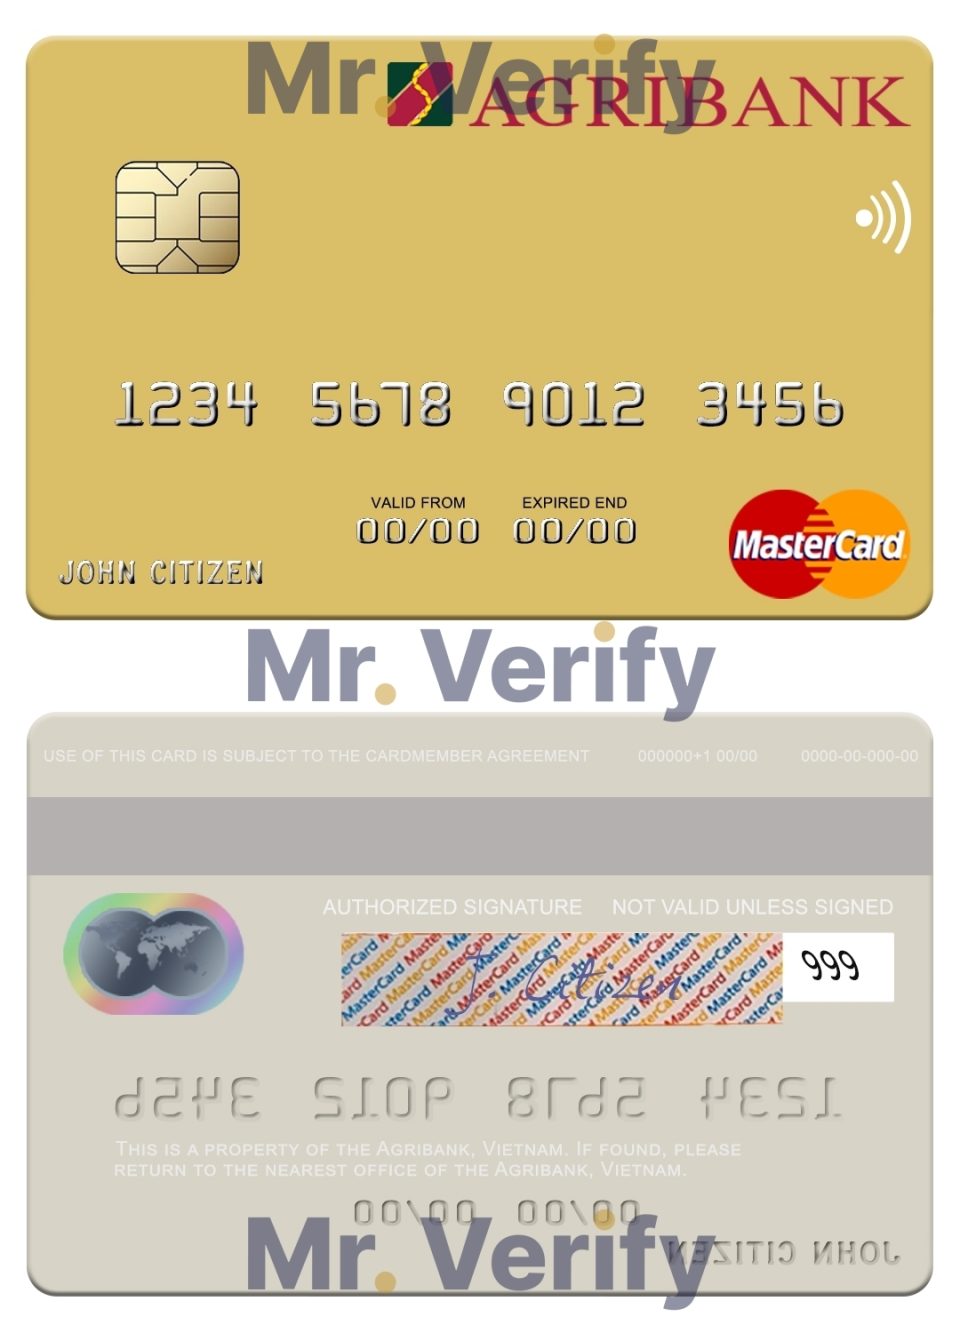 Fillable Vietnam Agribank mastercard credit card Templates | Layer-Based PSD